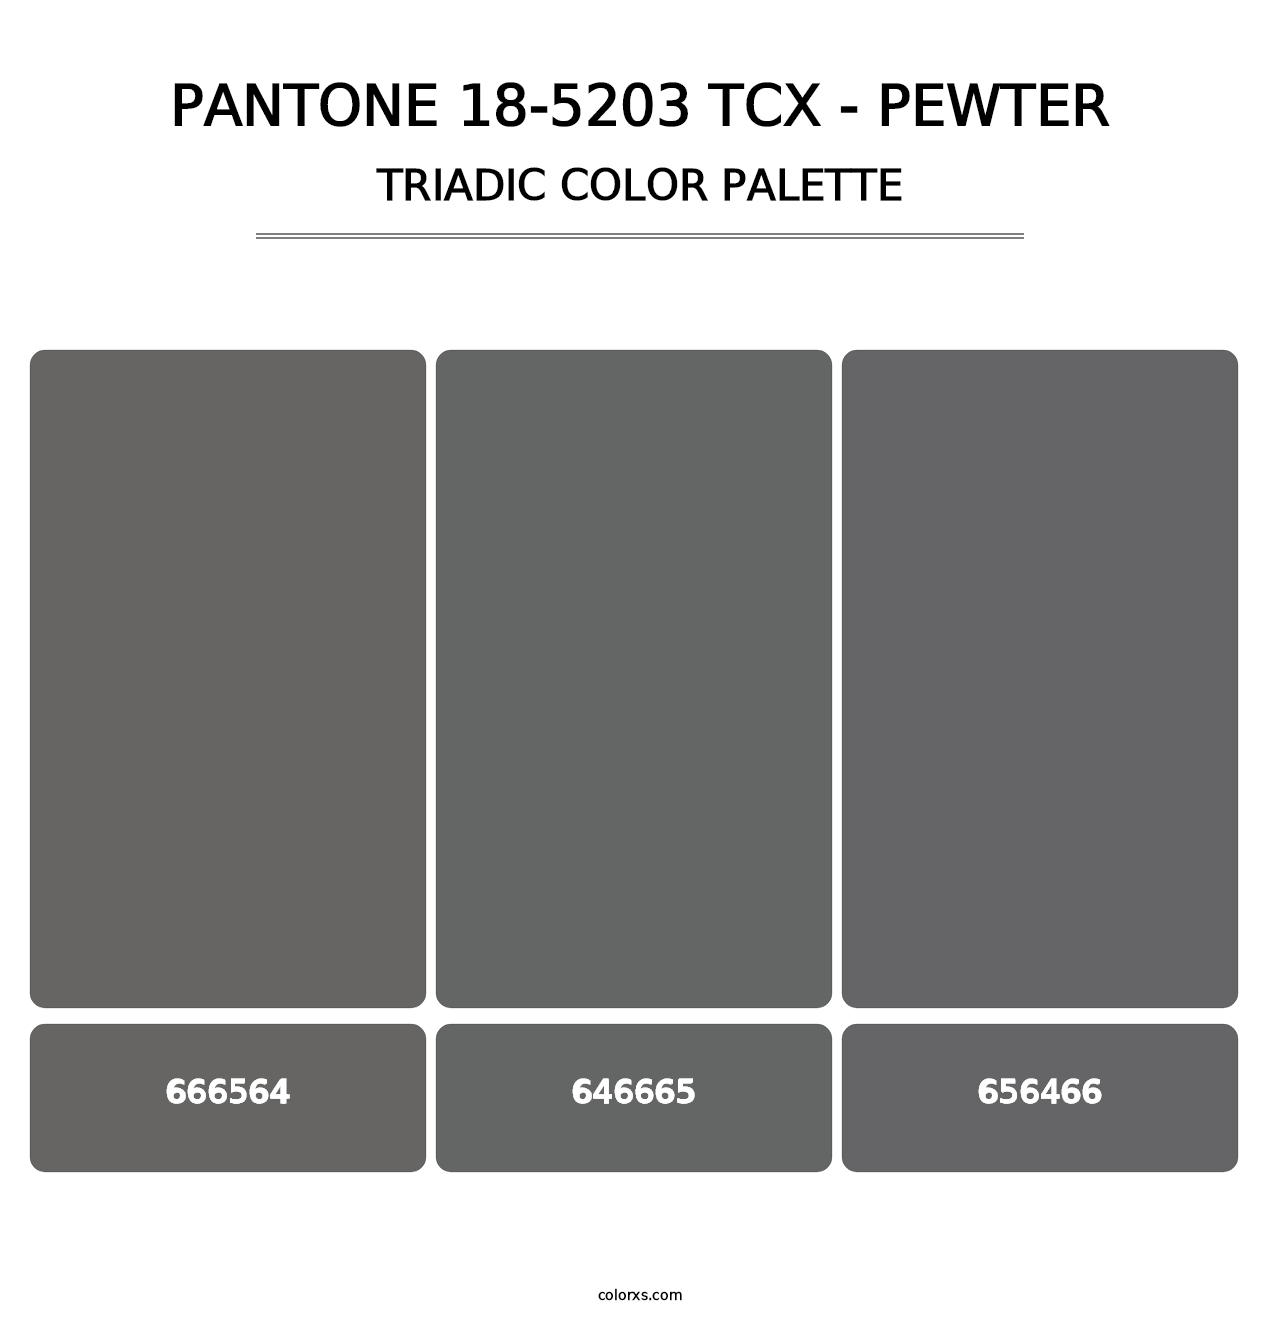 PANTONE 18-5203 TCX - Pewter - Triadic Color Palette